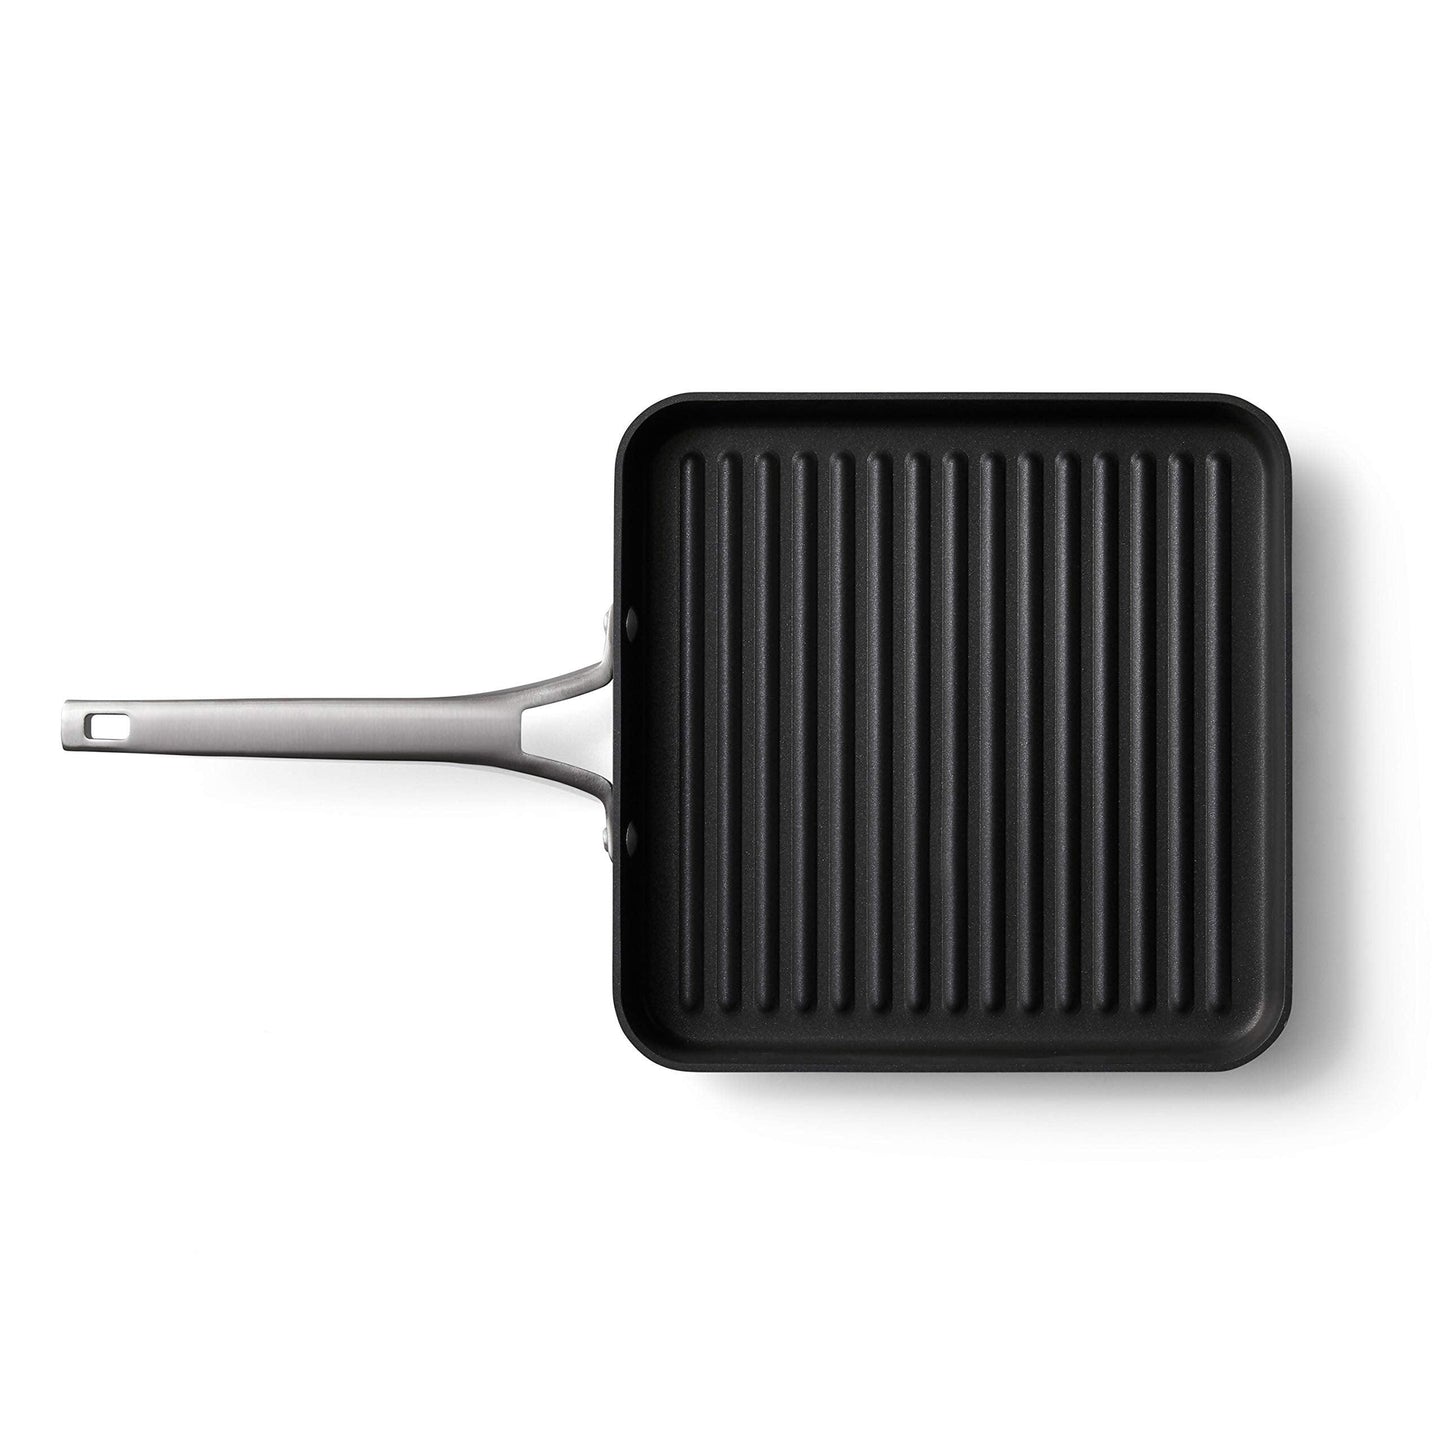 Calphalon Premier Hard-Anodized Nonstick 11-Inch Square Grill Pan, Black - CookCave